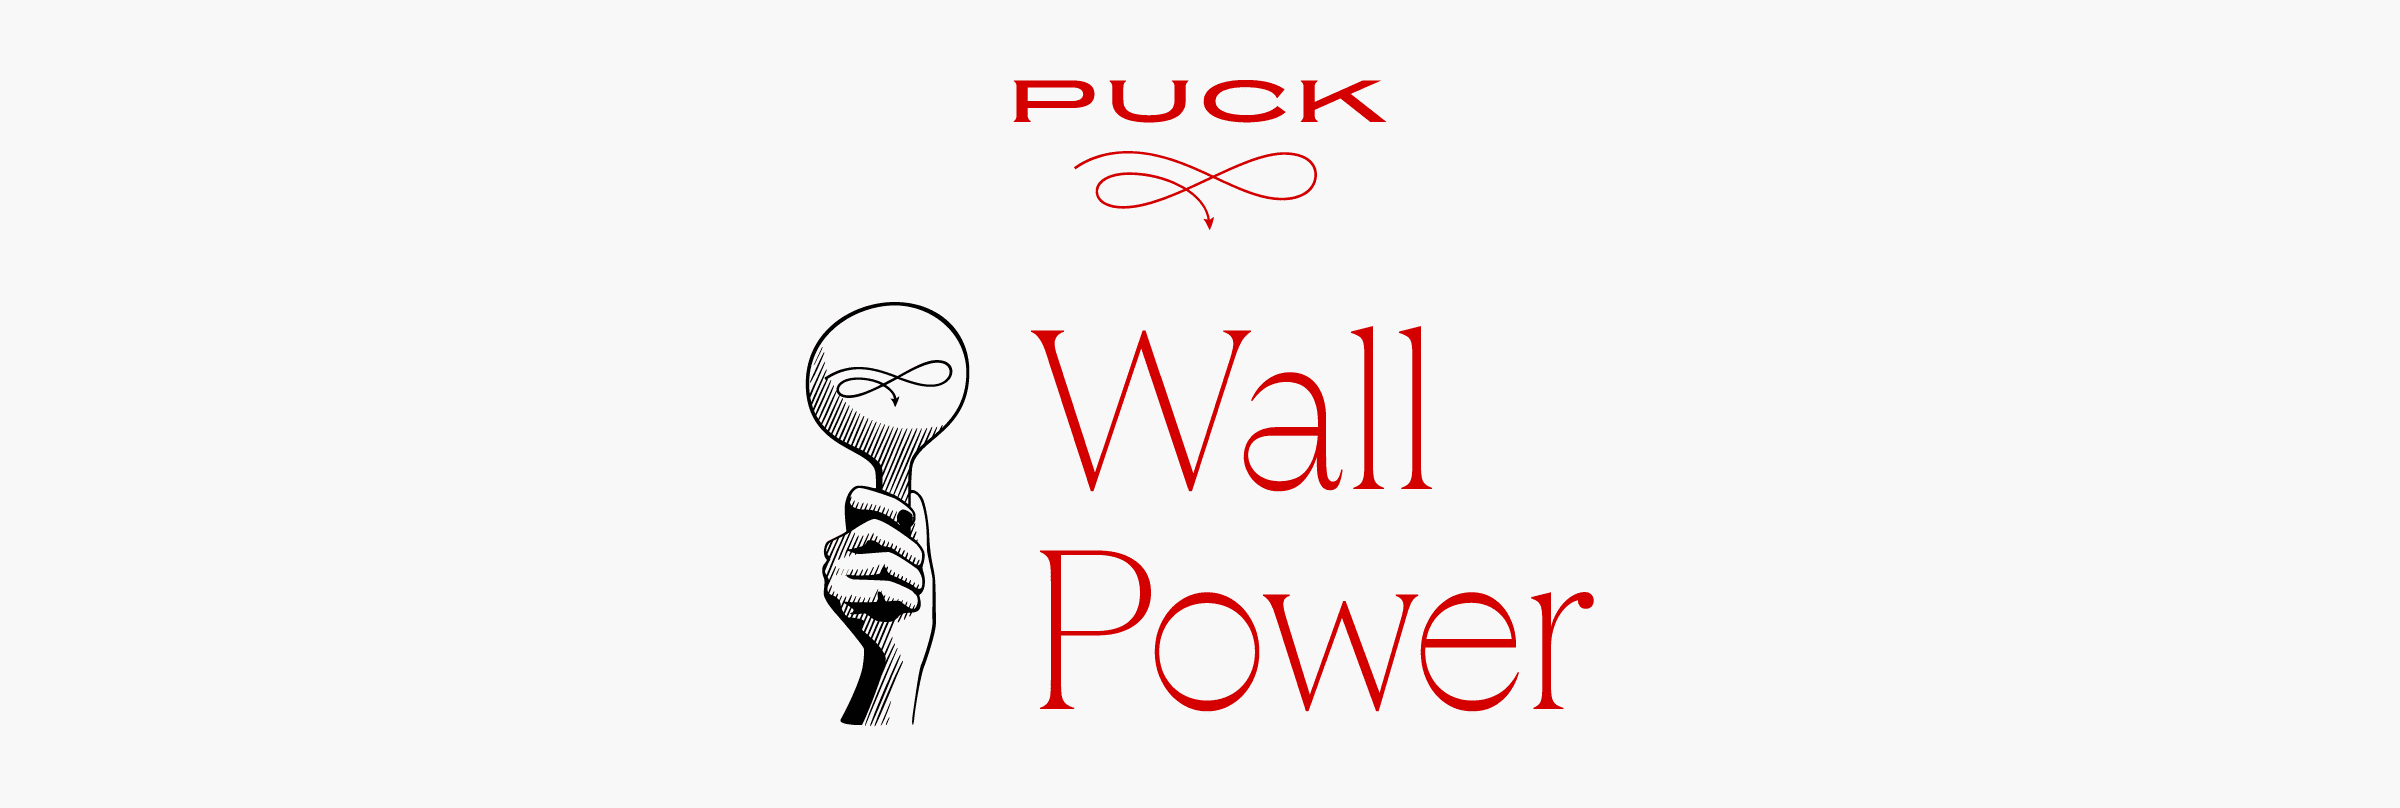 Wall Power